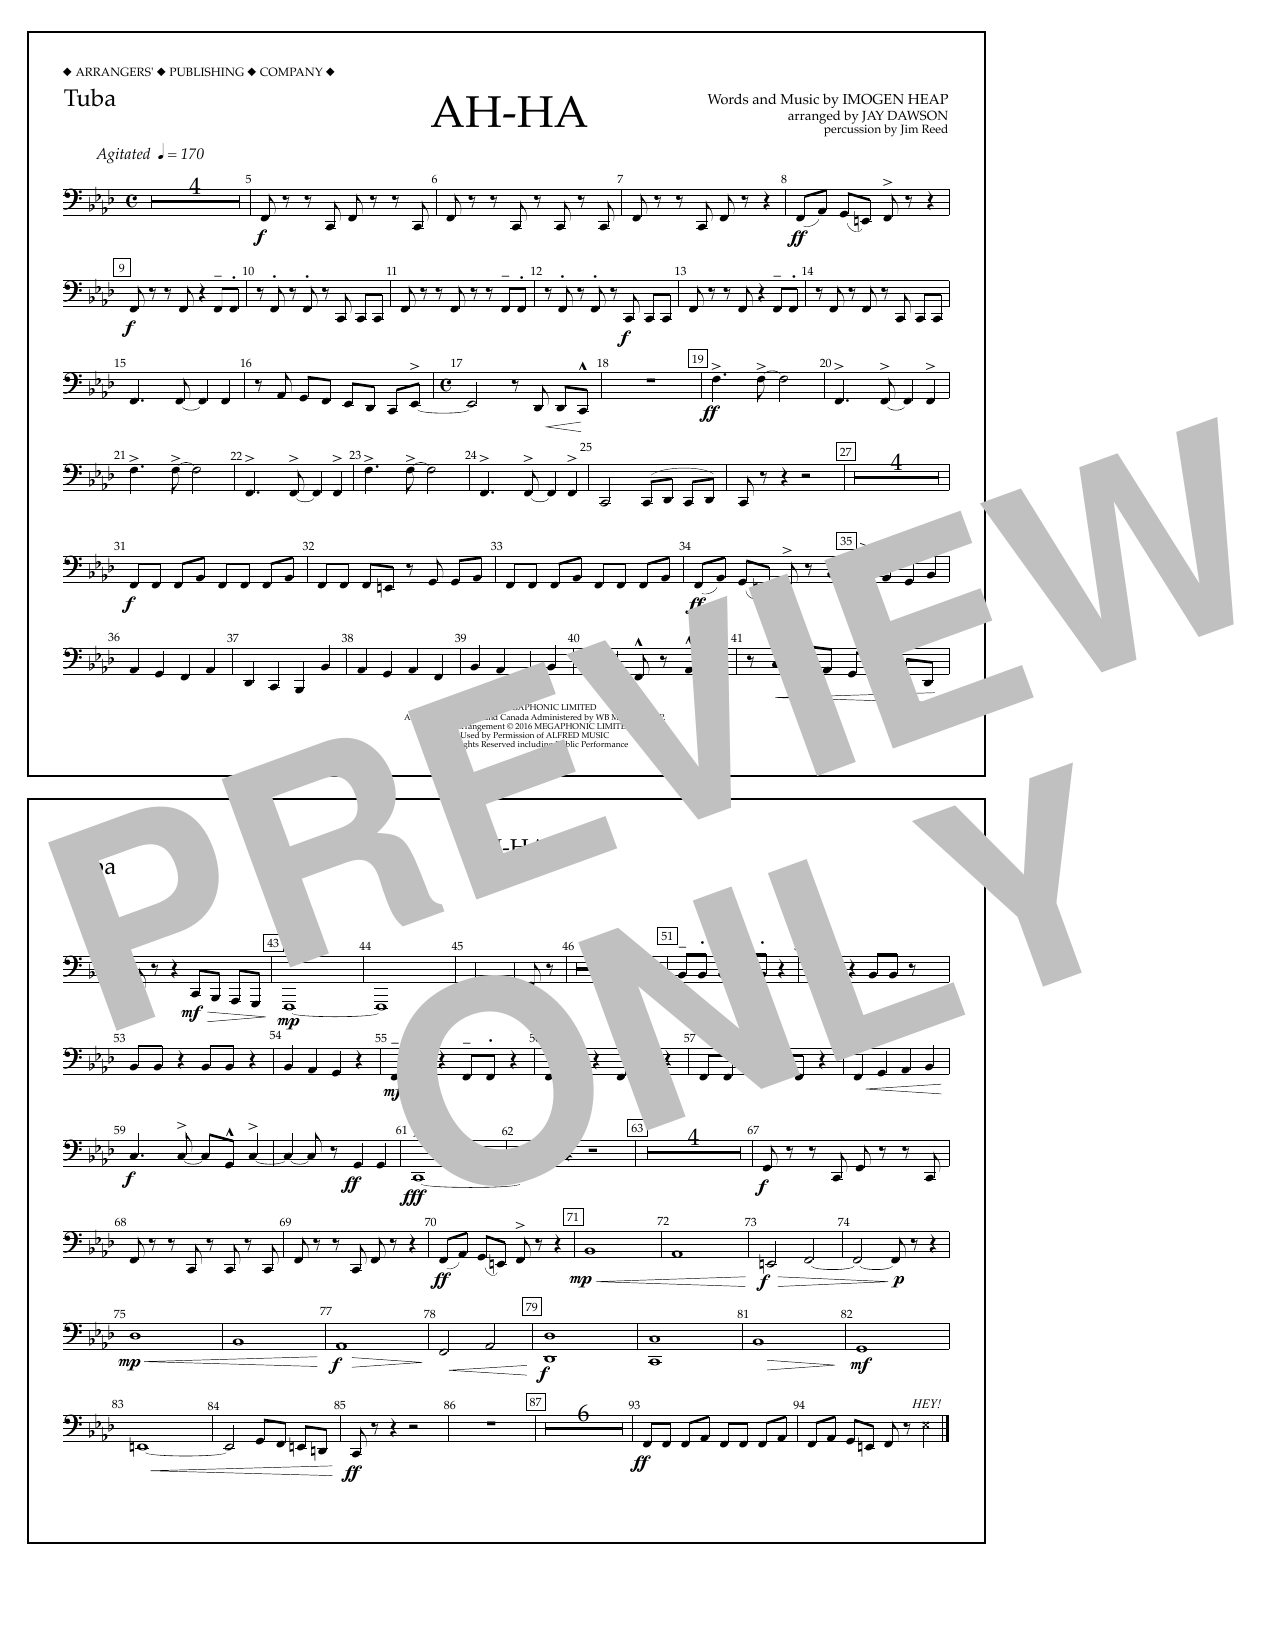 Jay Dawson Ah-ha - Tuba Sheet Music Notes & Chords for Marching Band - Download or Print PDF